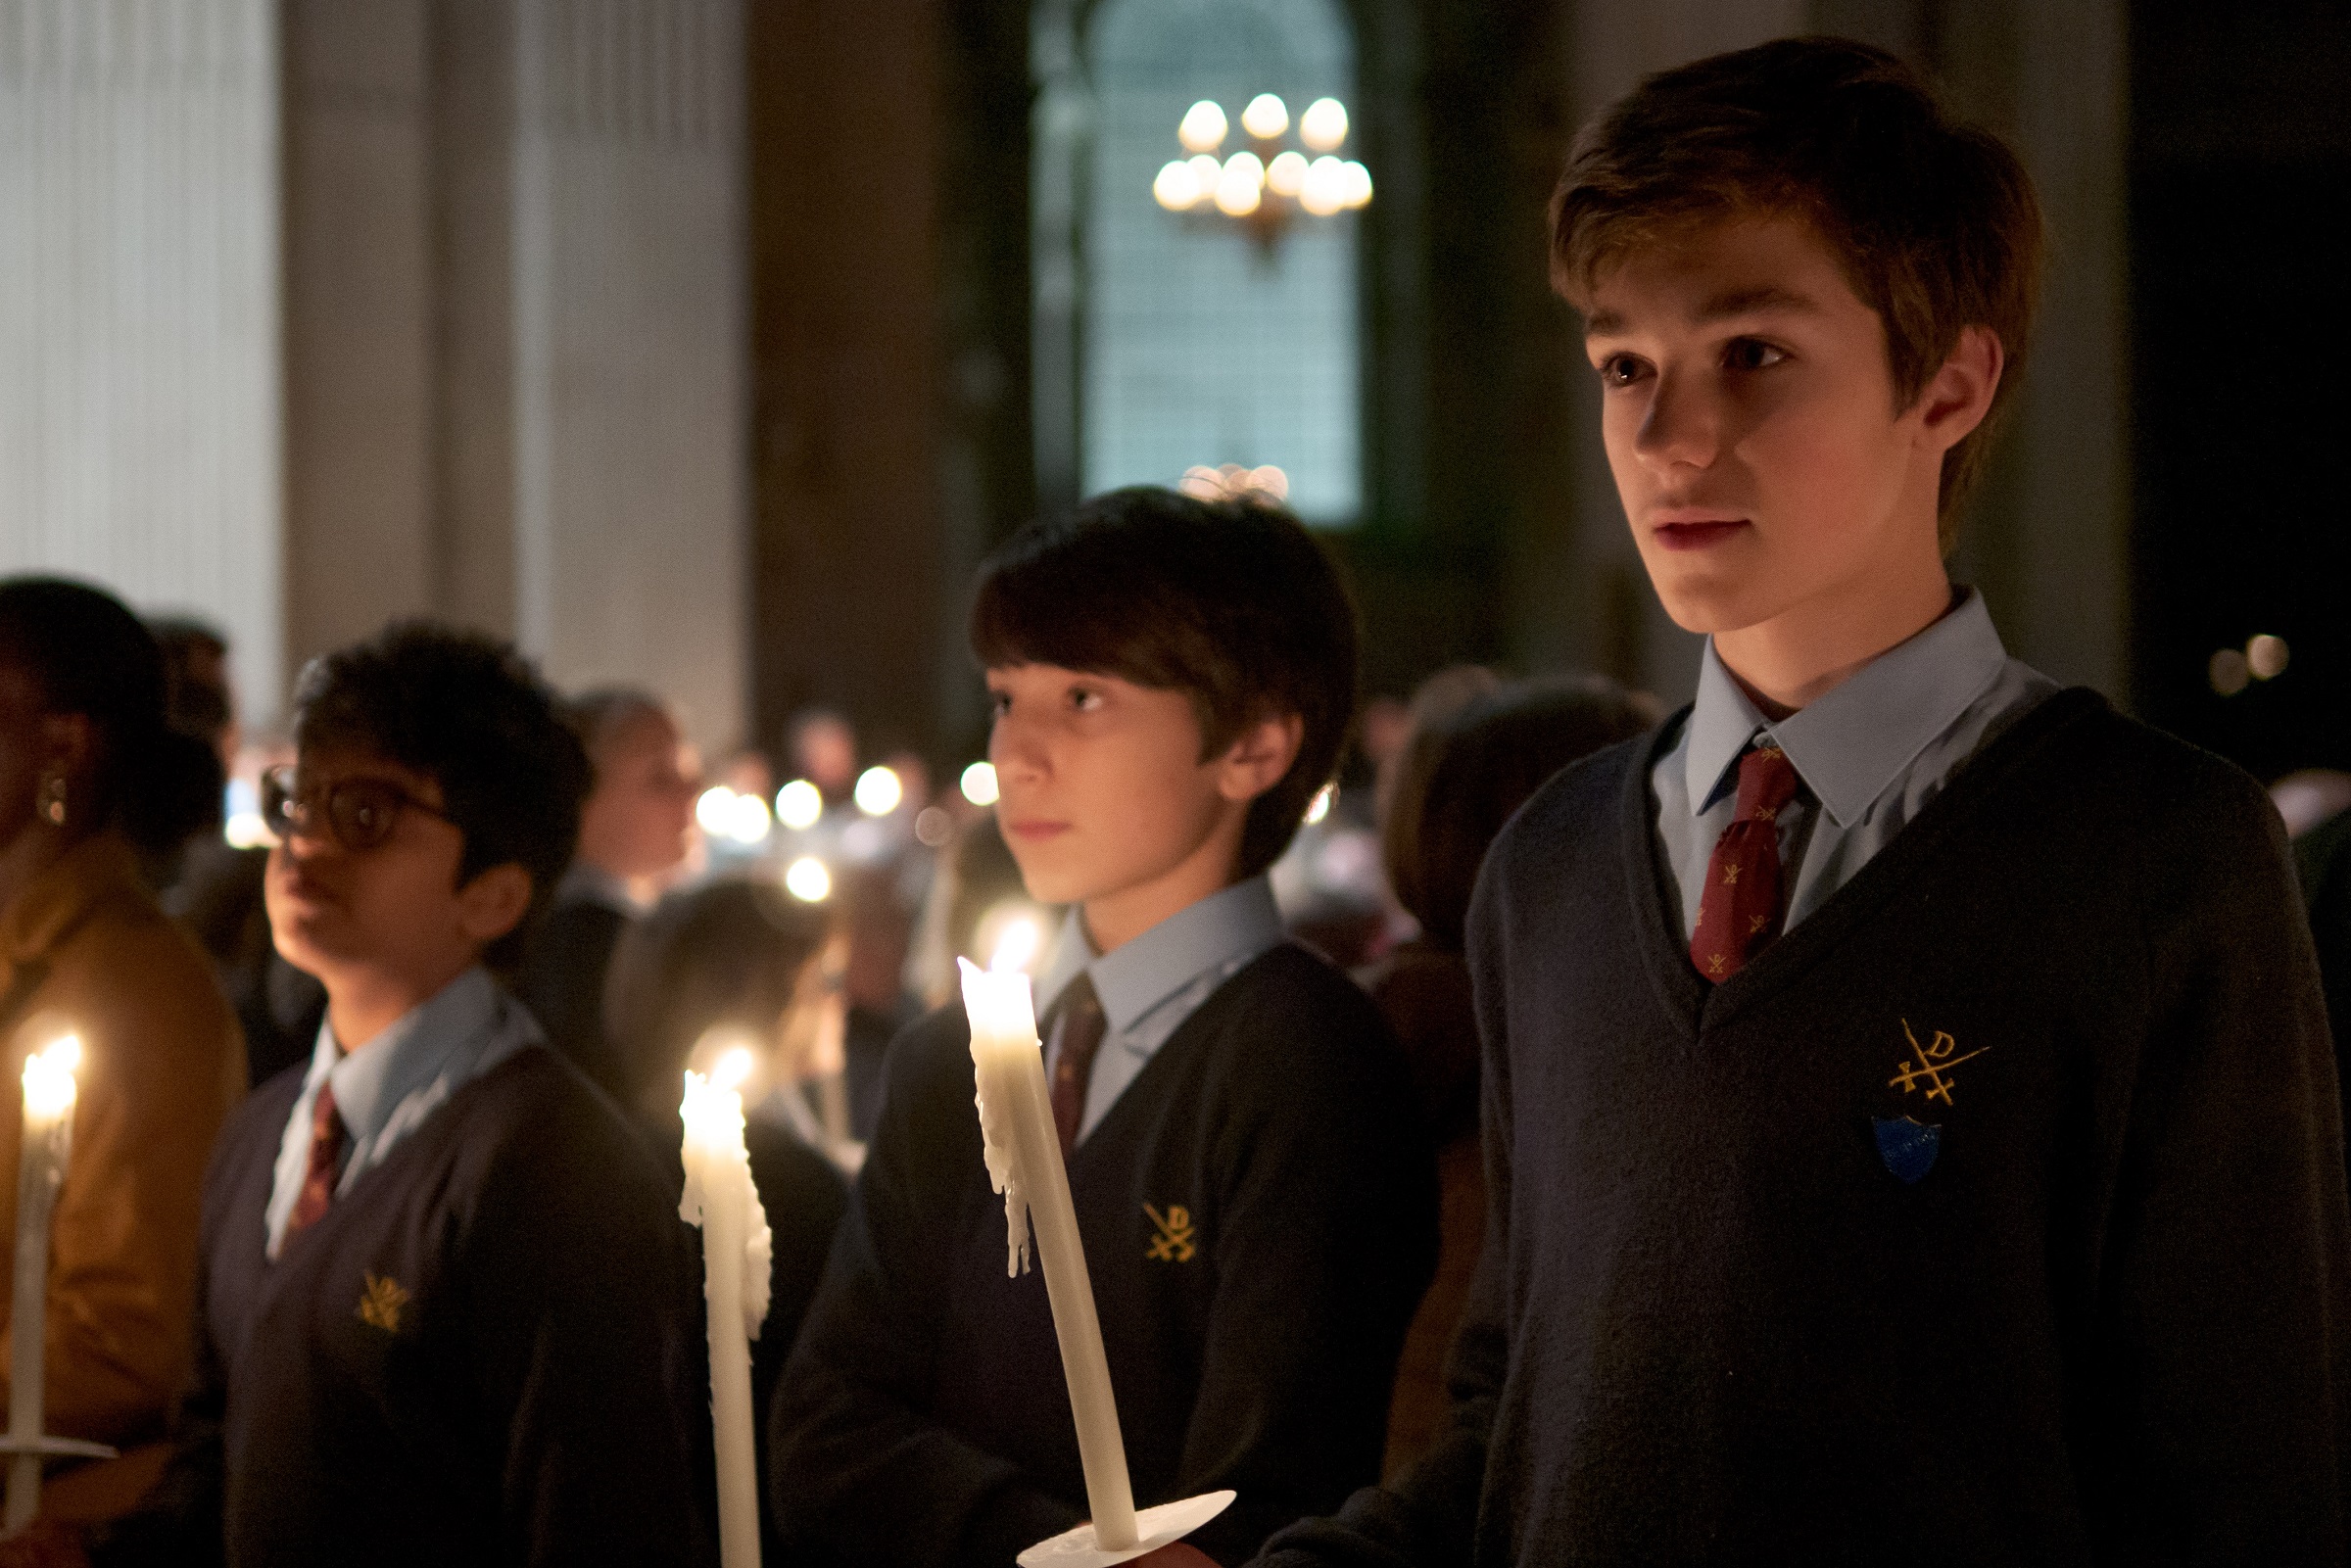 Service dark candles singing school